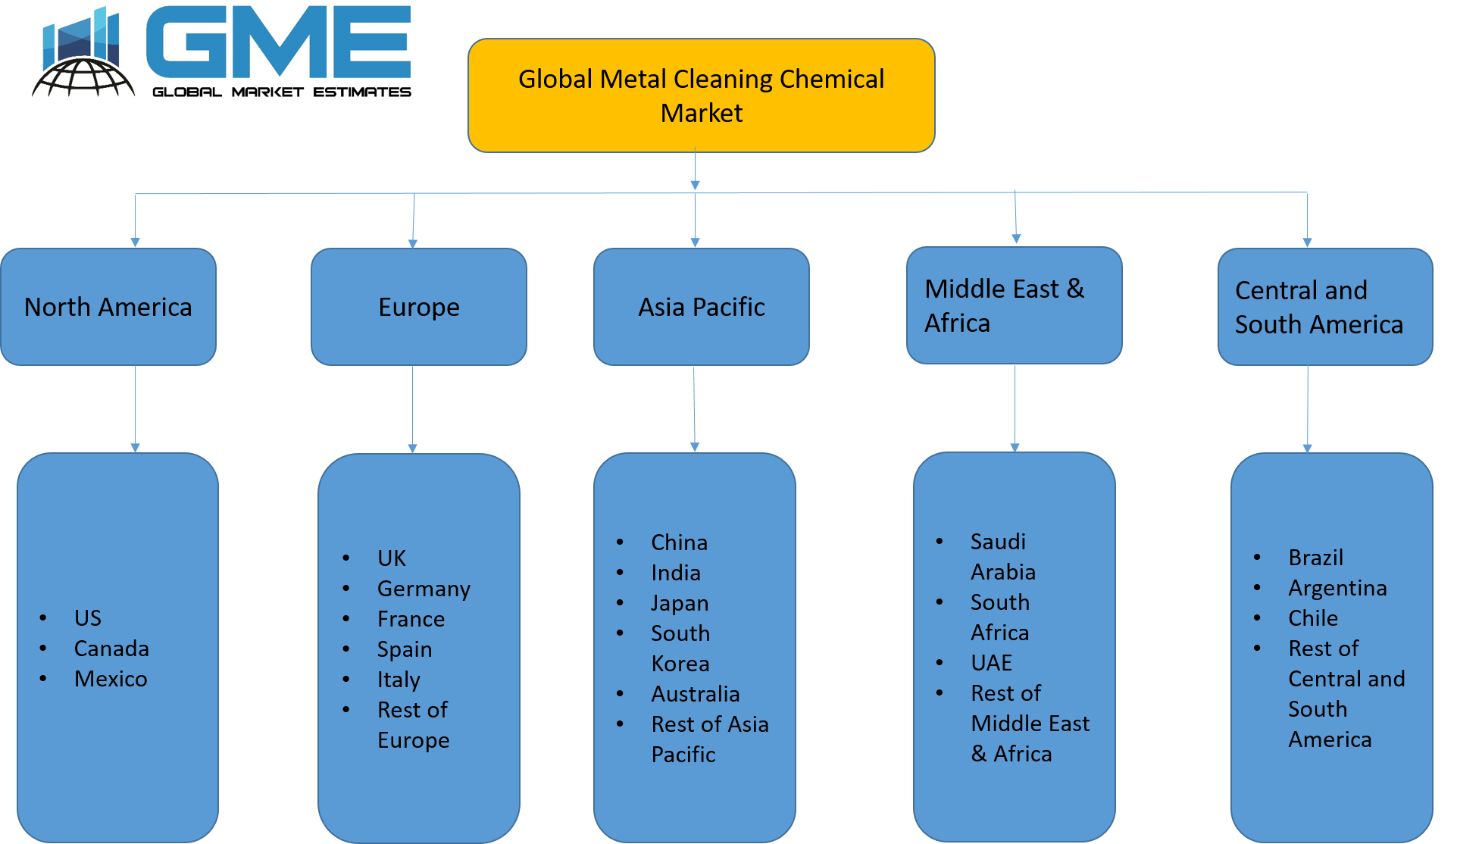 Global Metal Cleaning Chemical Market - Regional Analysis